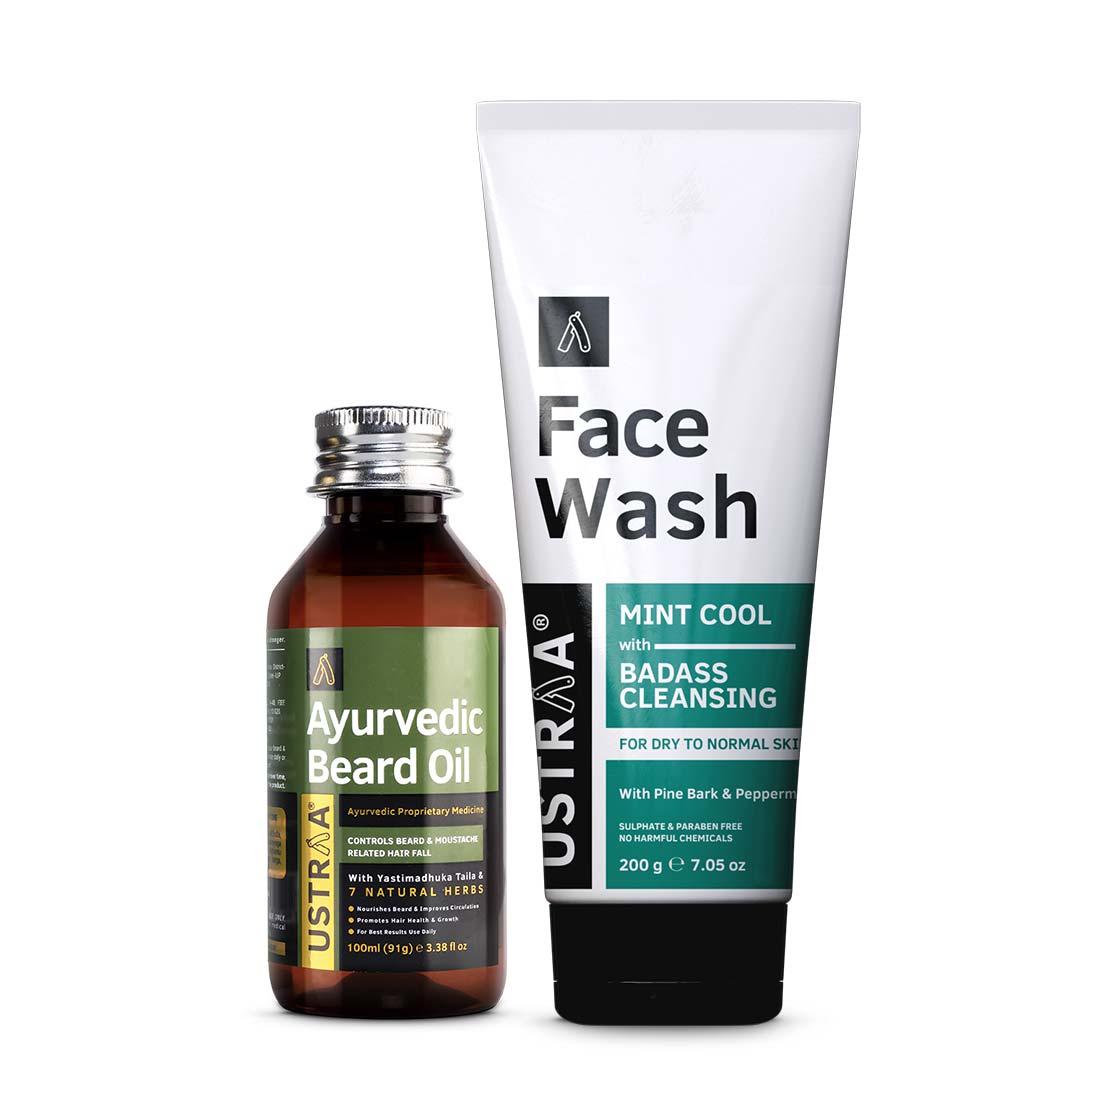 Ayurvedic Beard Oil & Face Wash Dry Skin